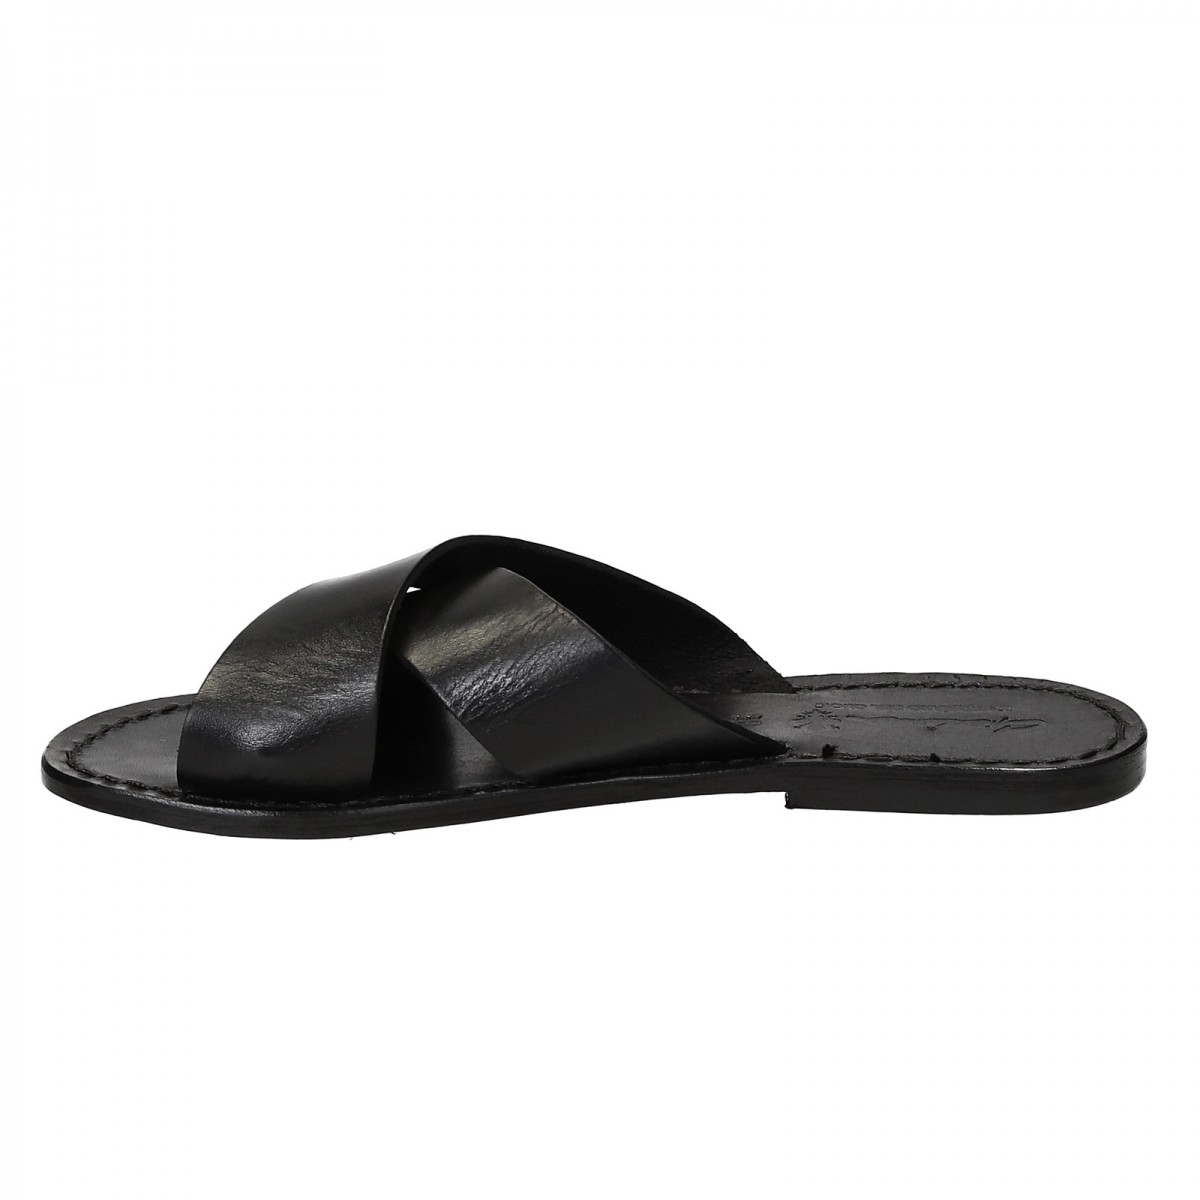 Black leather slide sandals for women handmade | The leather craftsmen